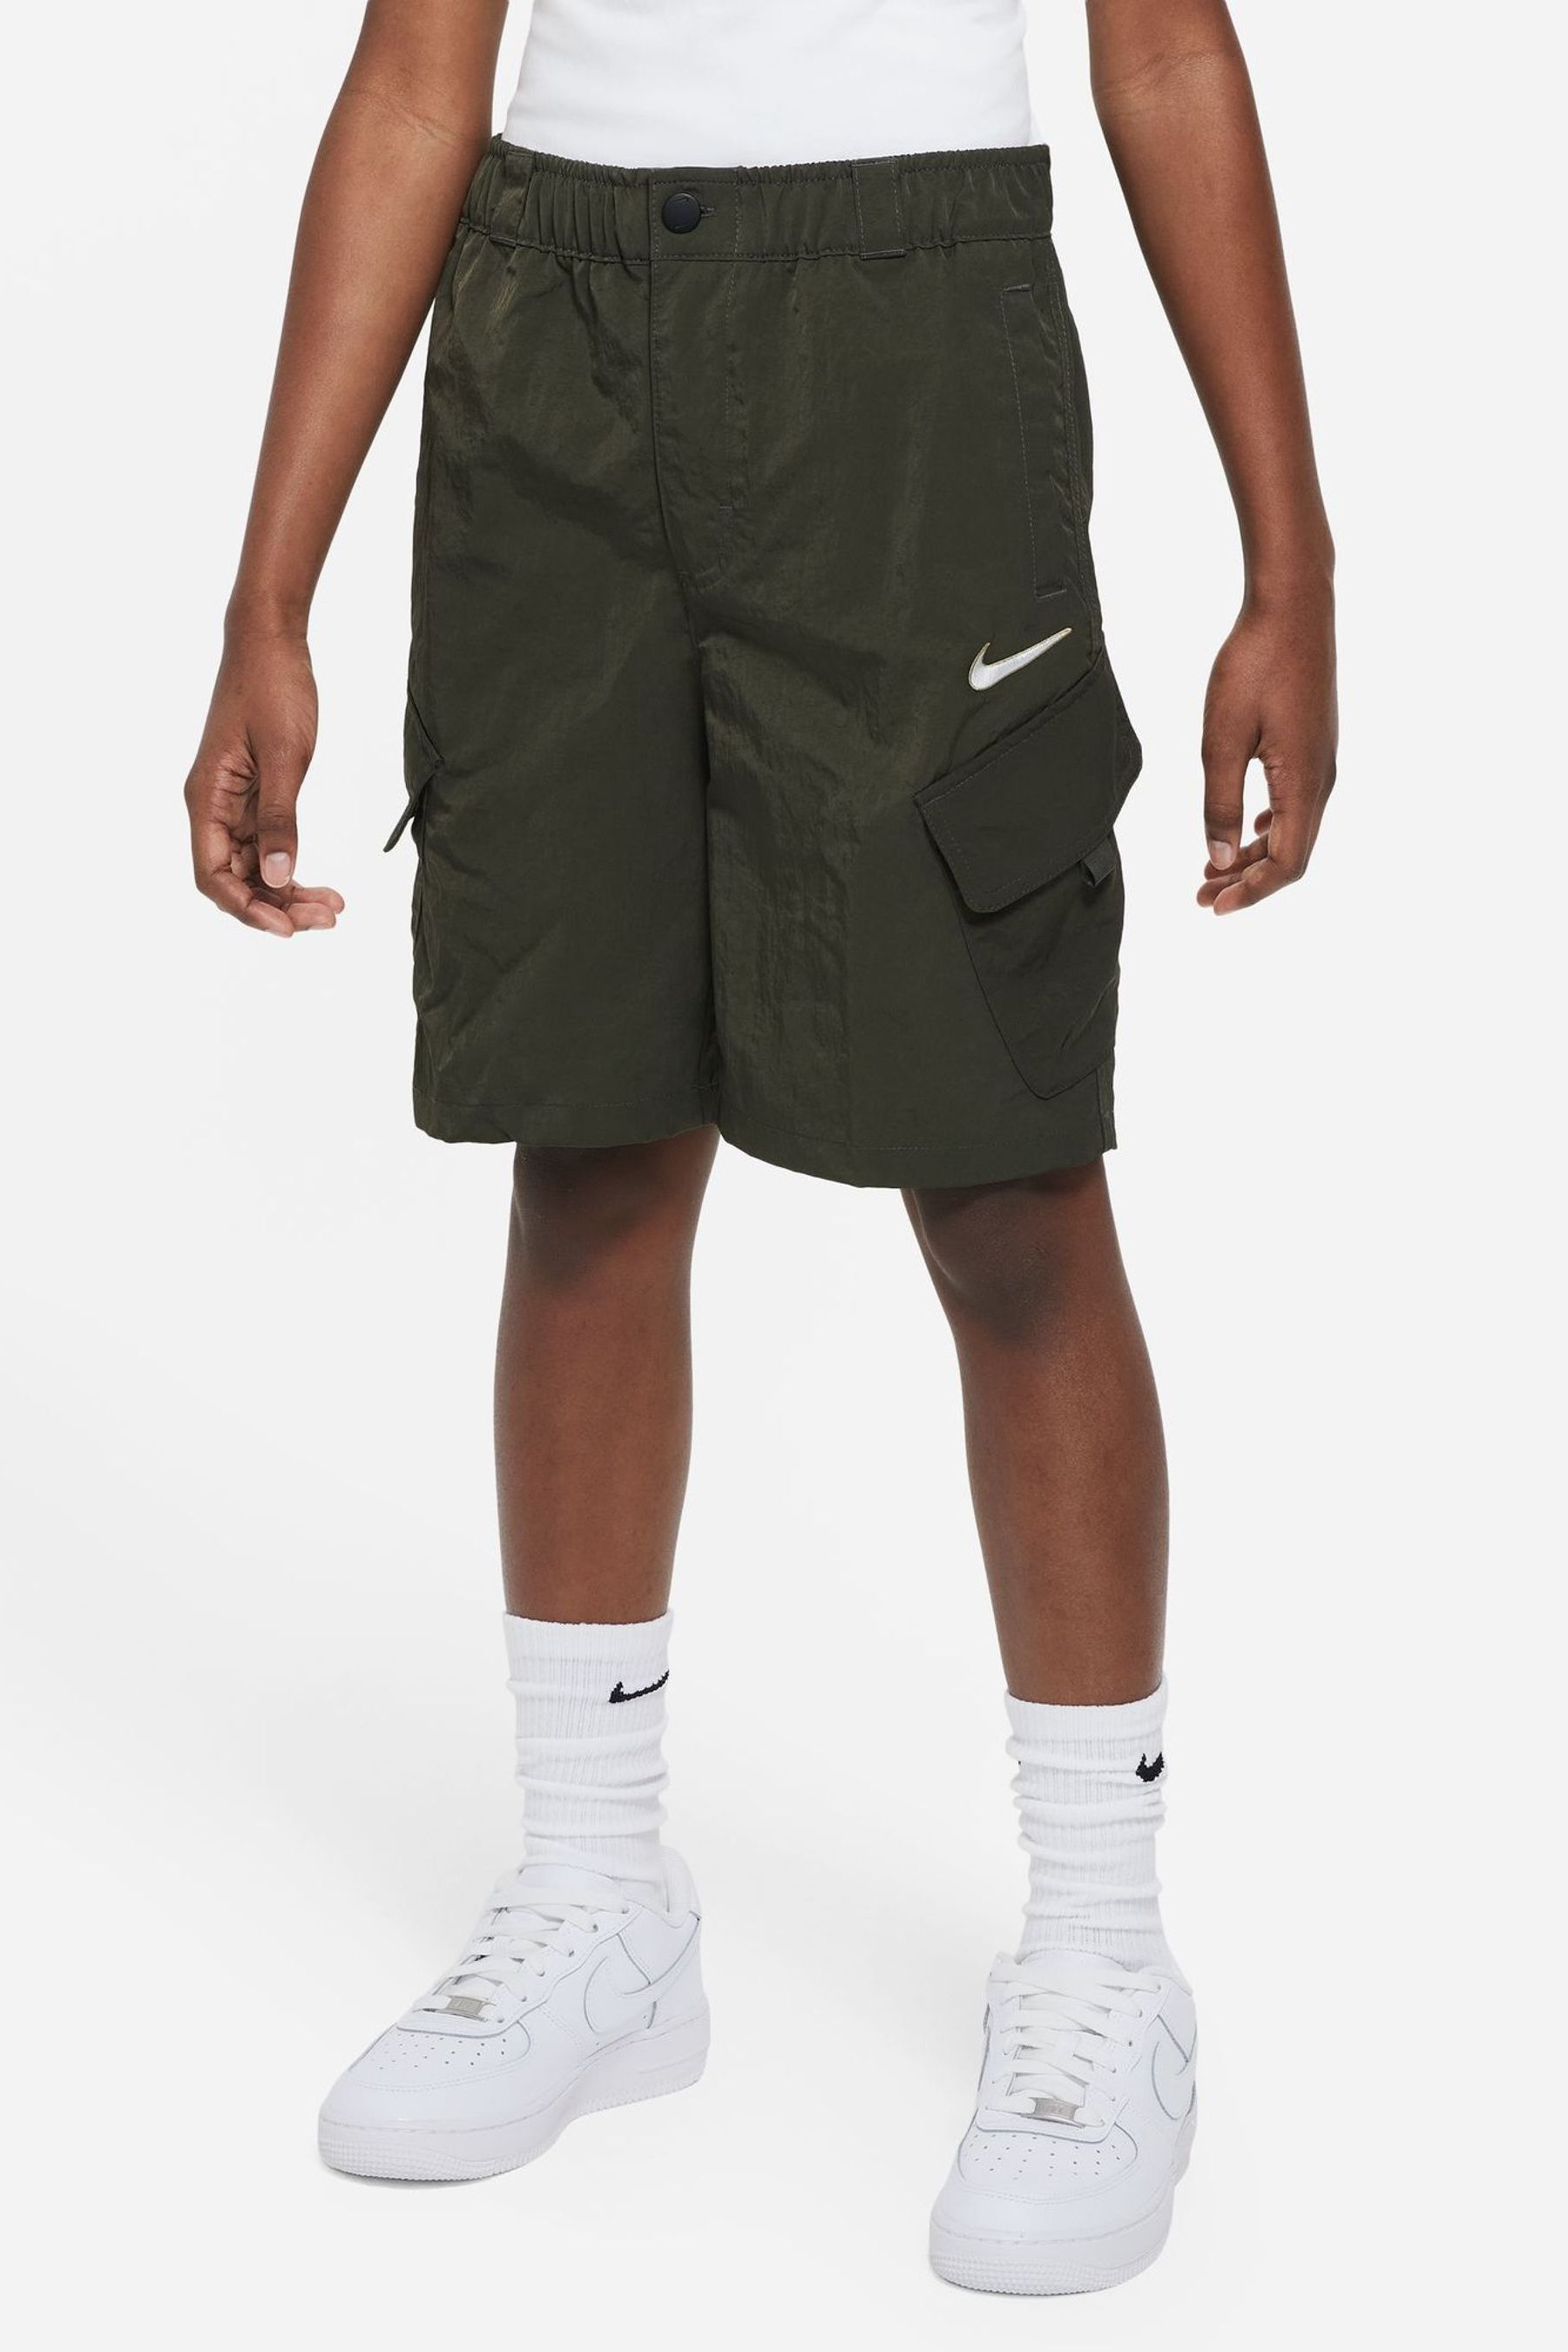 Buy Nike Khaki Green Woven Cargo Shorts from the Next UK online shop